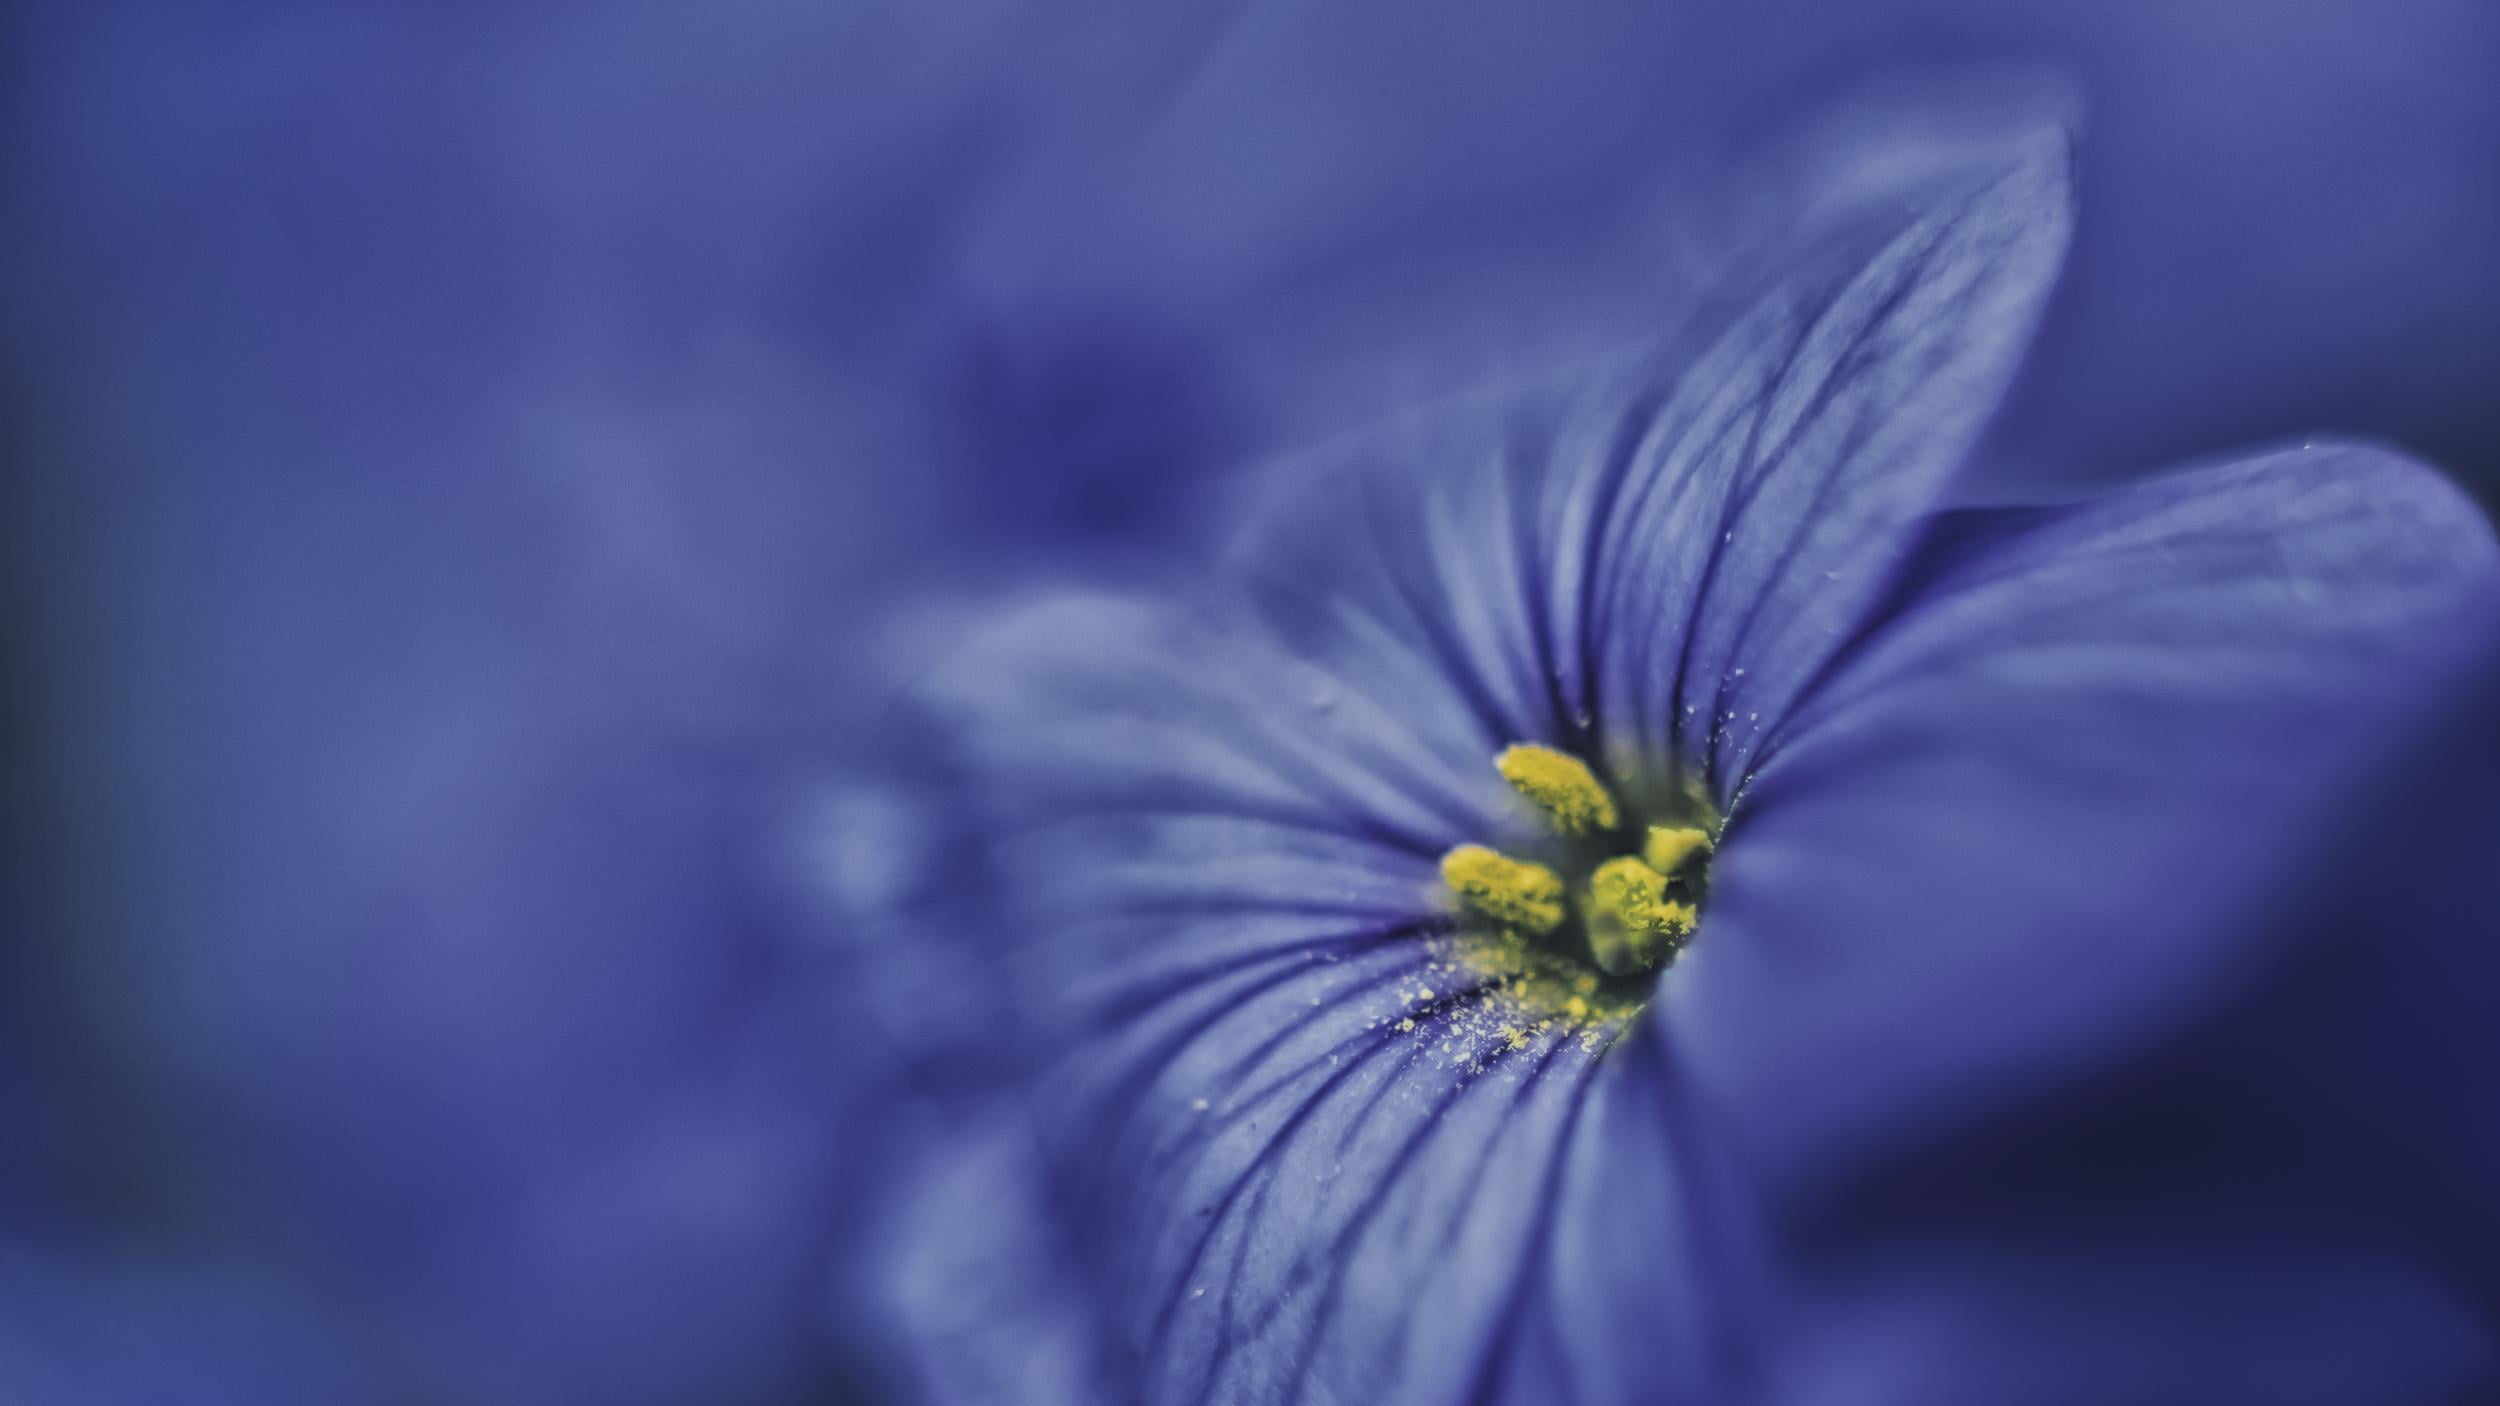 closeup photography of purple petaled flower